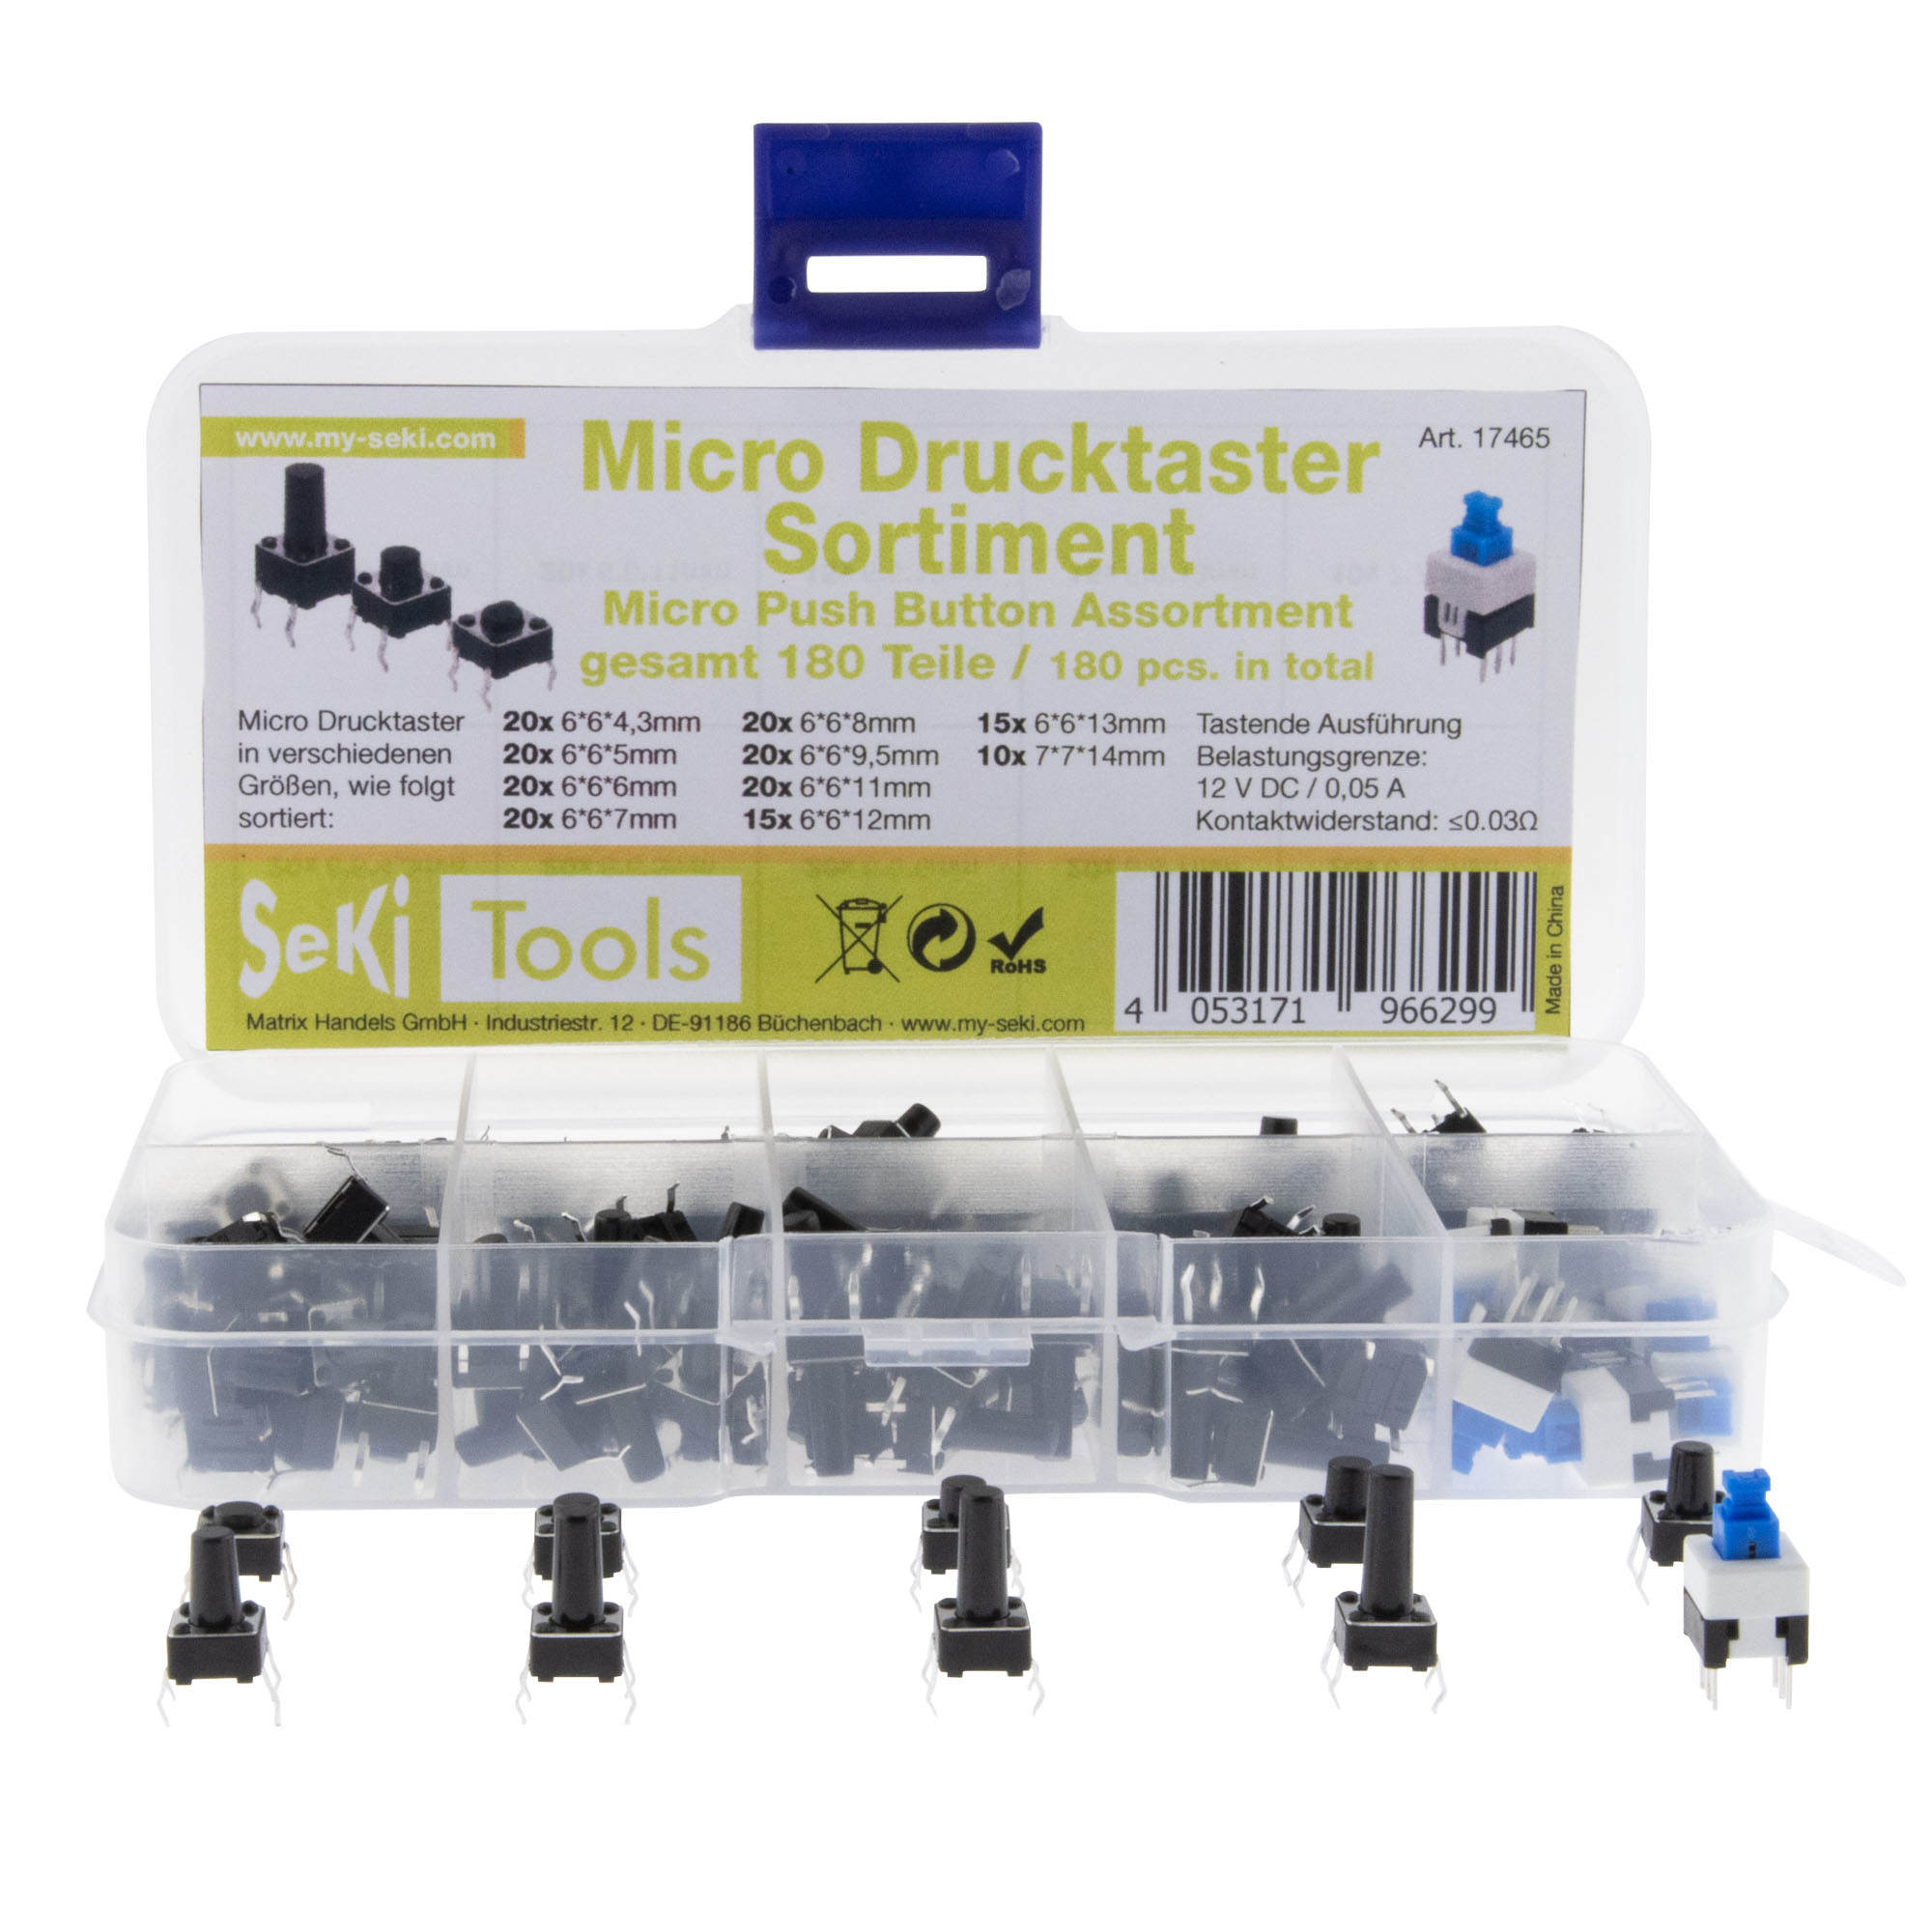 Micro Drucktaster Sortiment 180 Teile